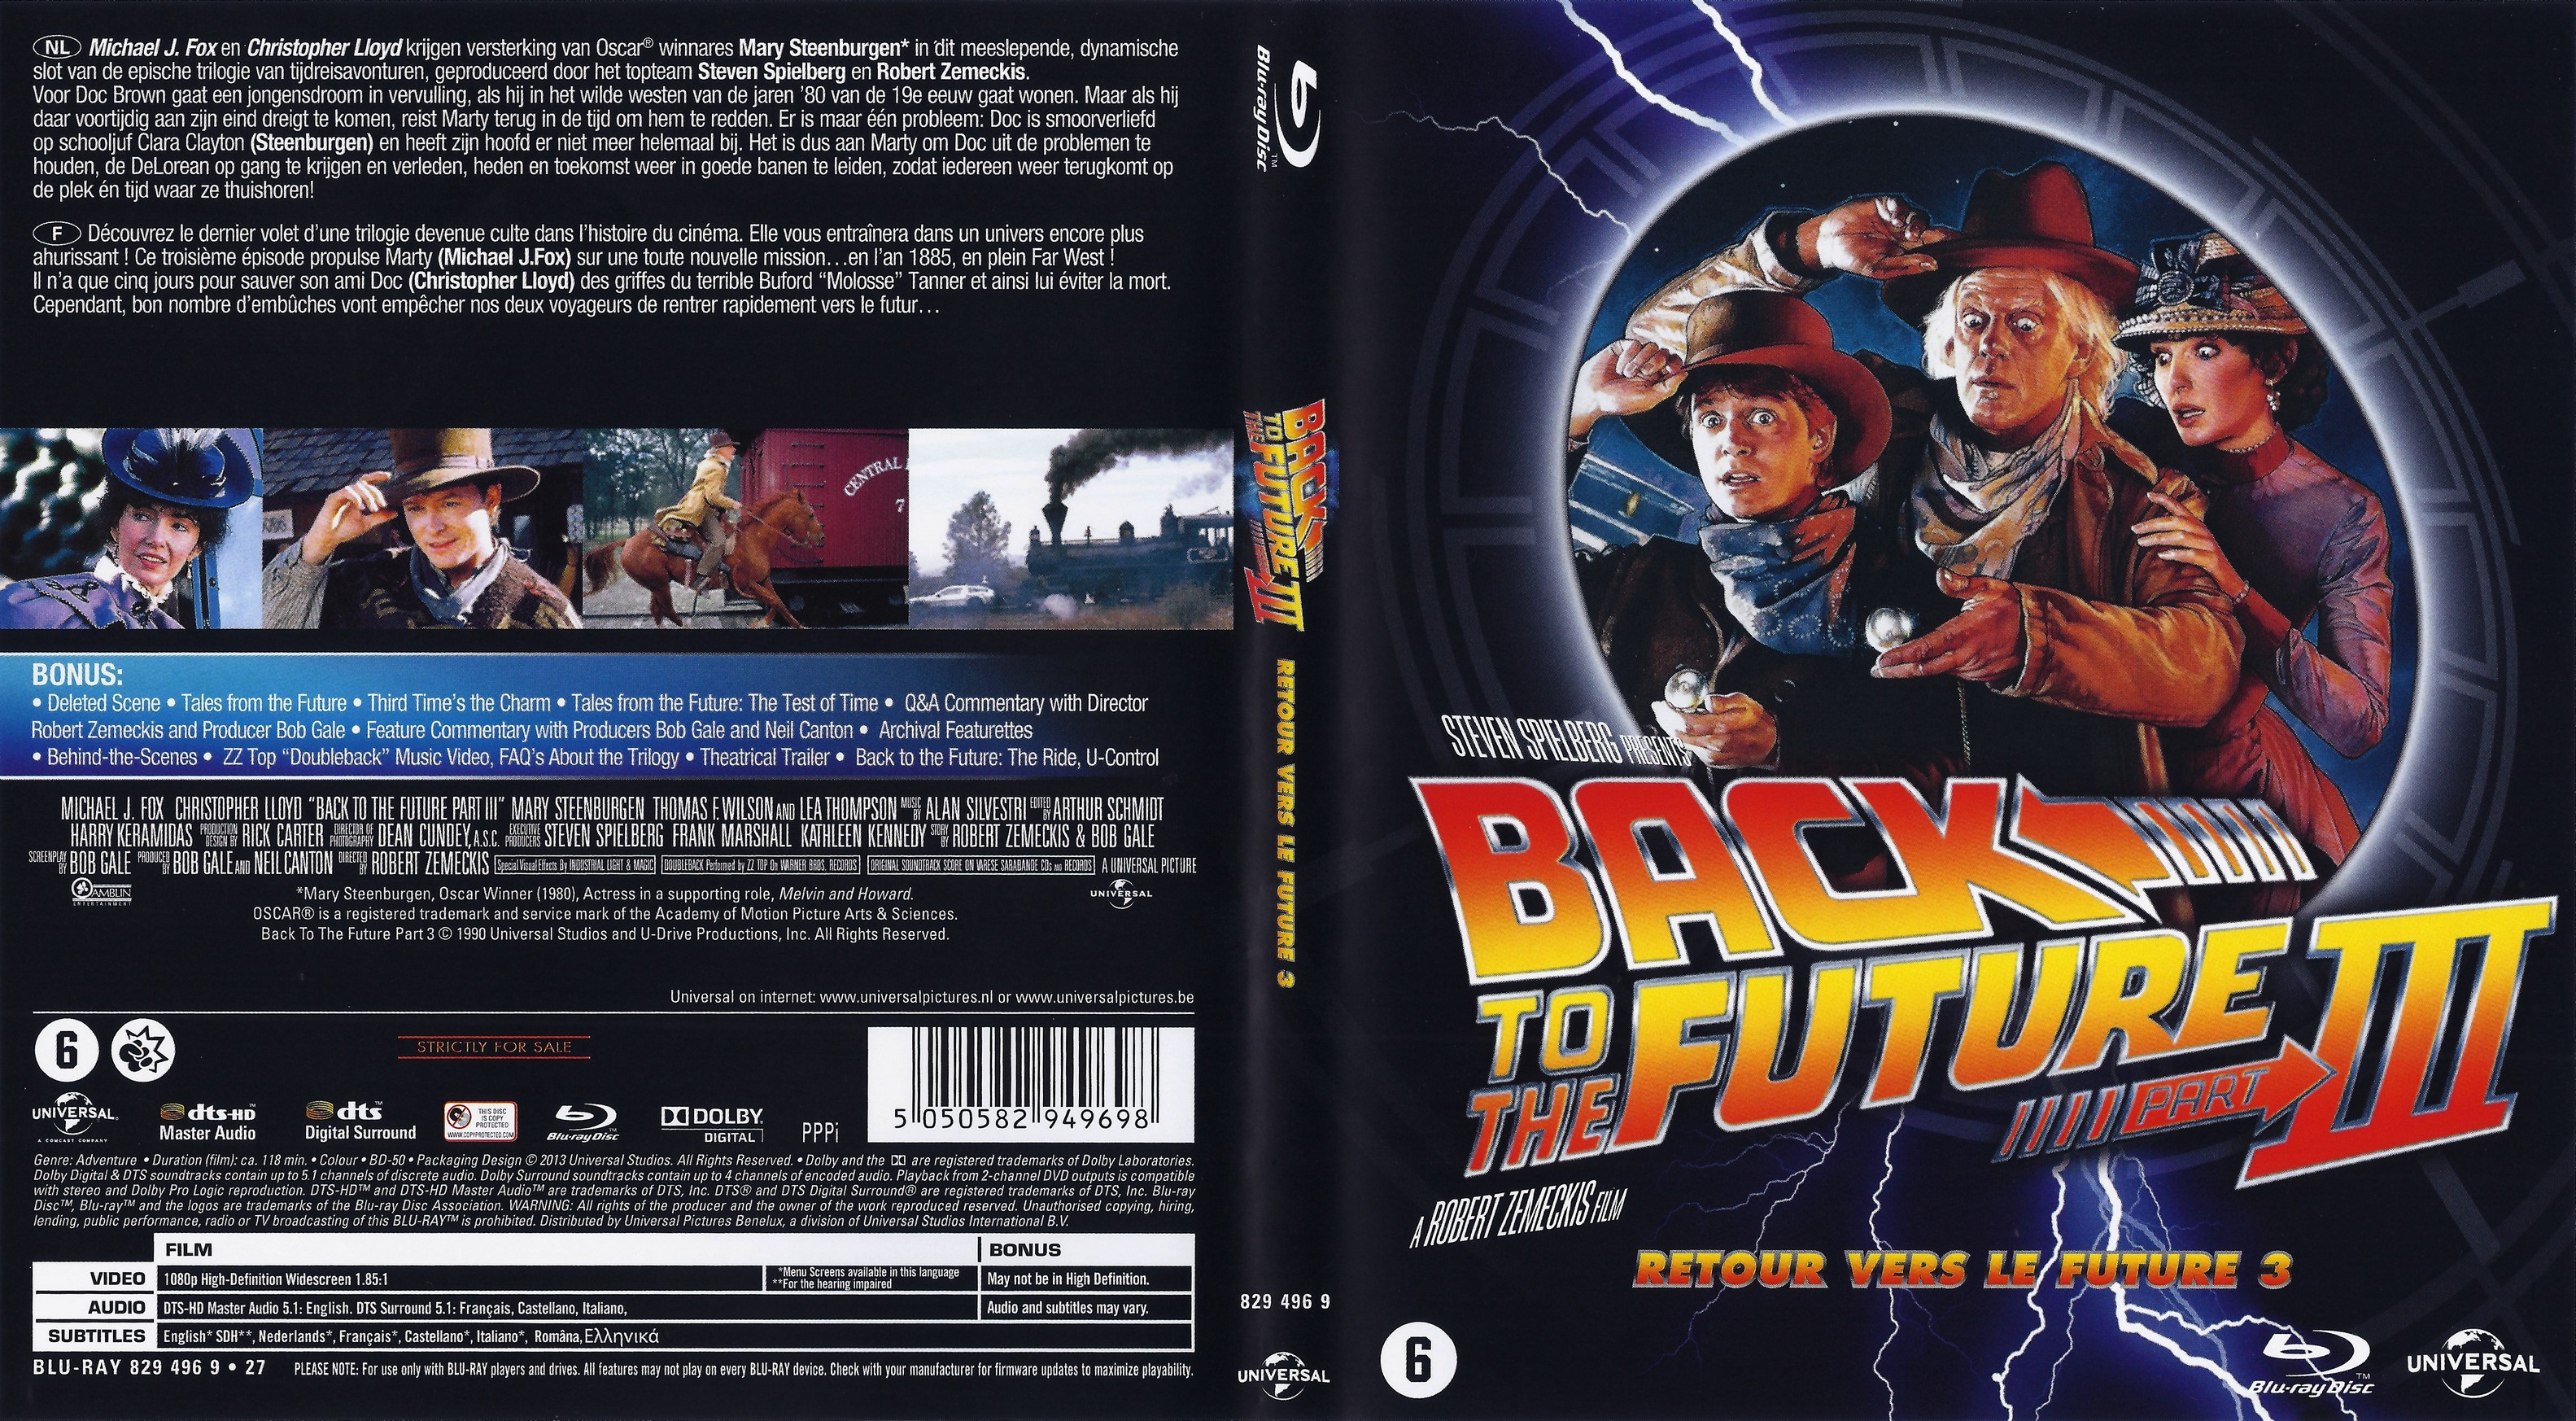 Jaquette DVD Retour vers le futur 3 (BLU-RAY) v2